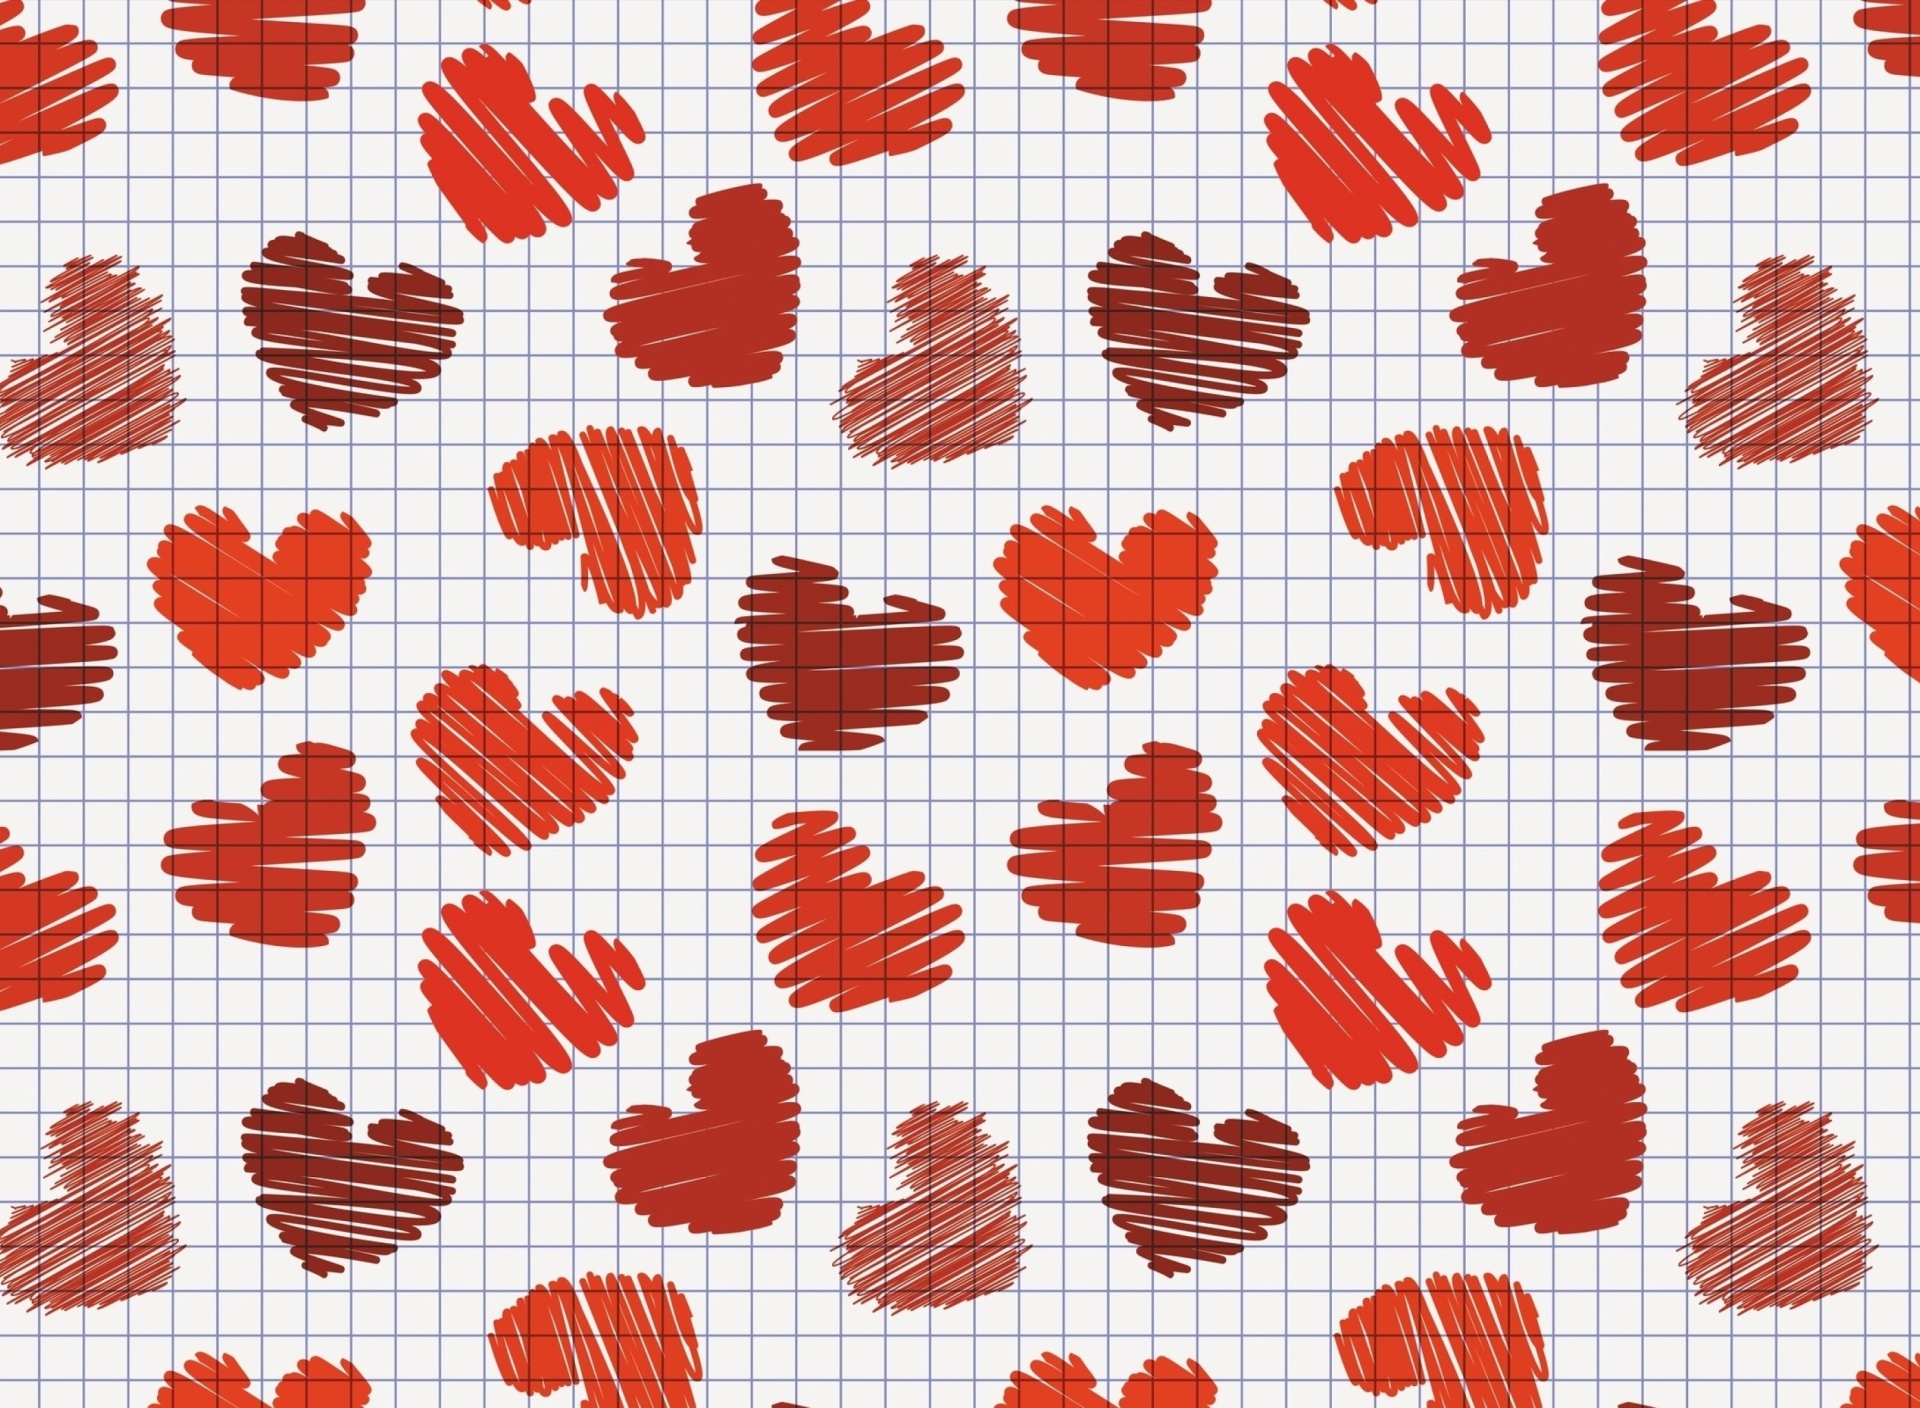 Drawn Hearts Texture wallpaper 1920x1408